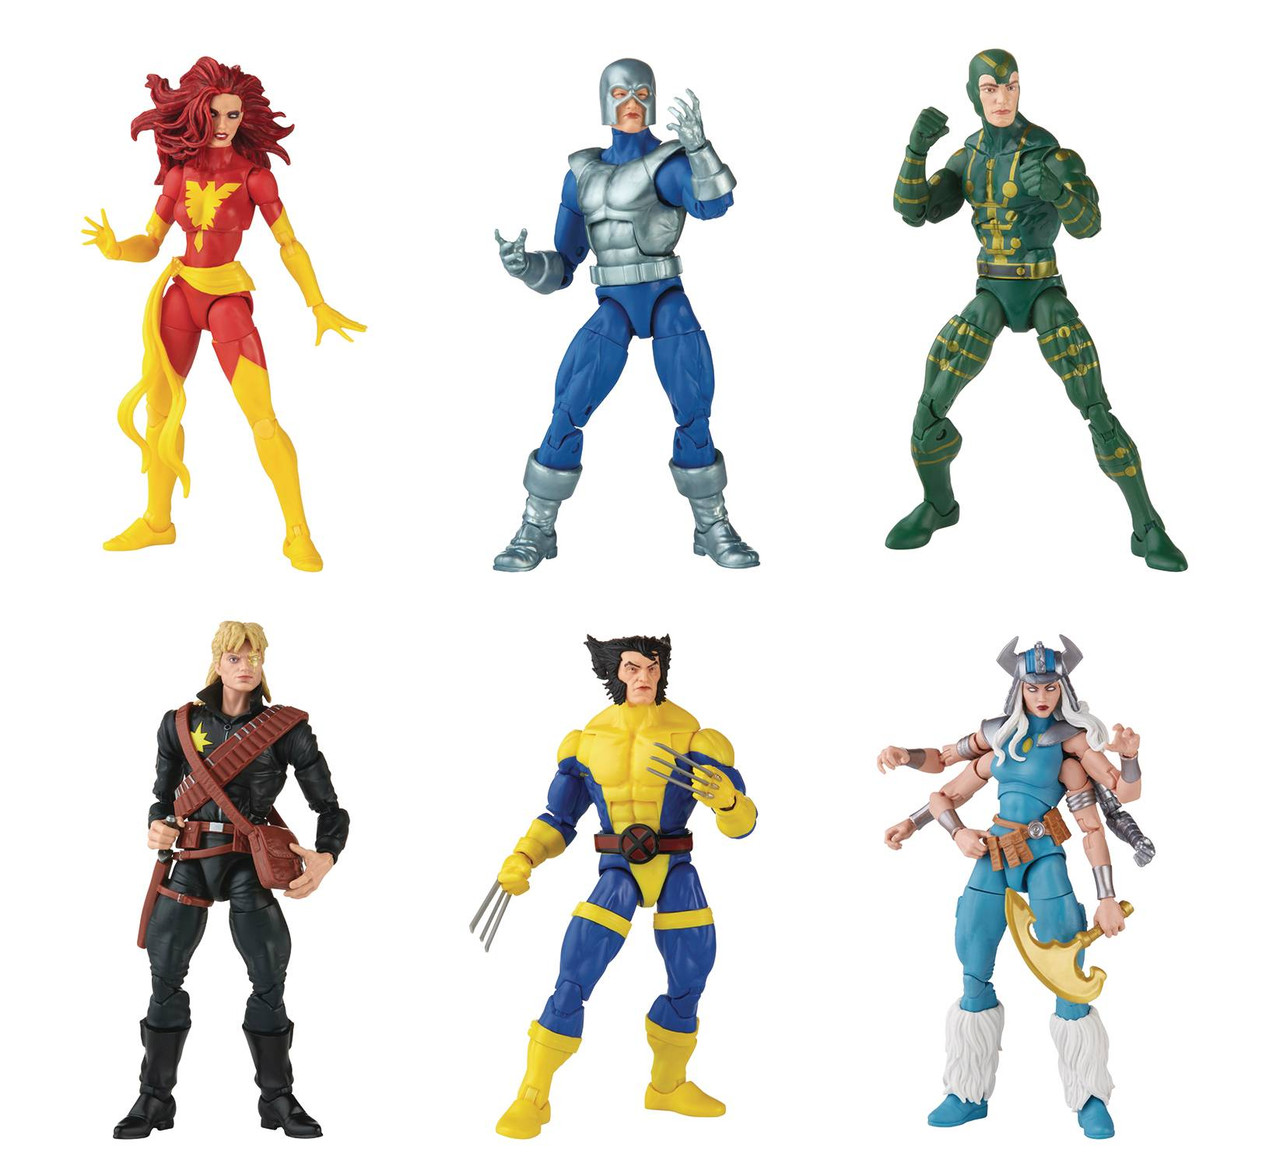  Marvel Legends Series Rogue, X-Men '97 Collectible 6